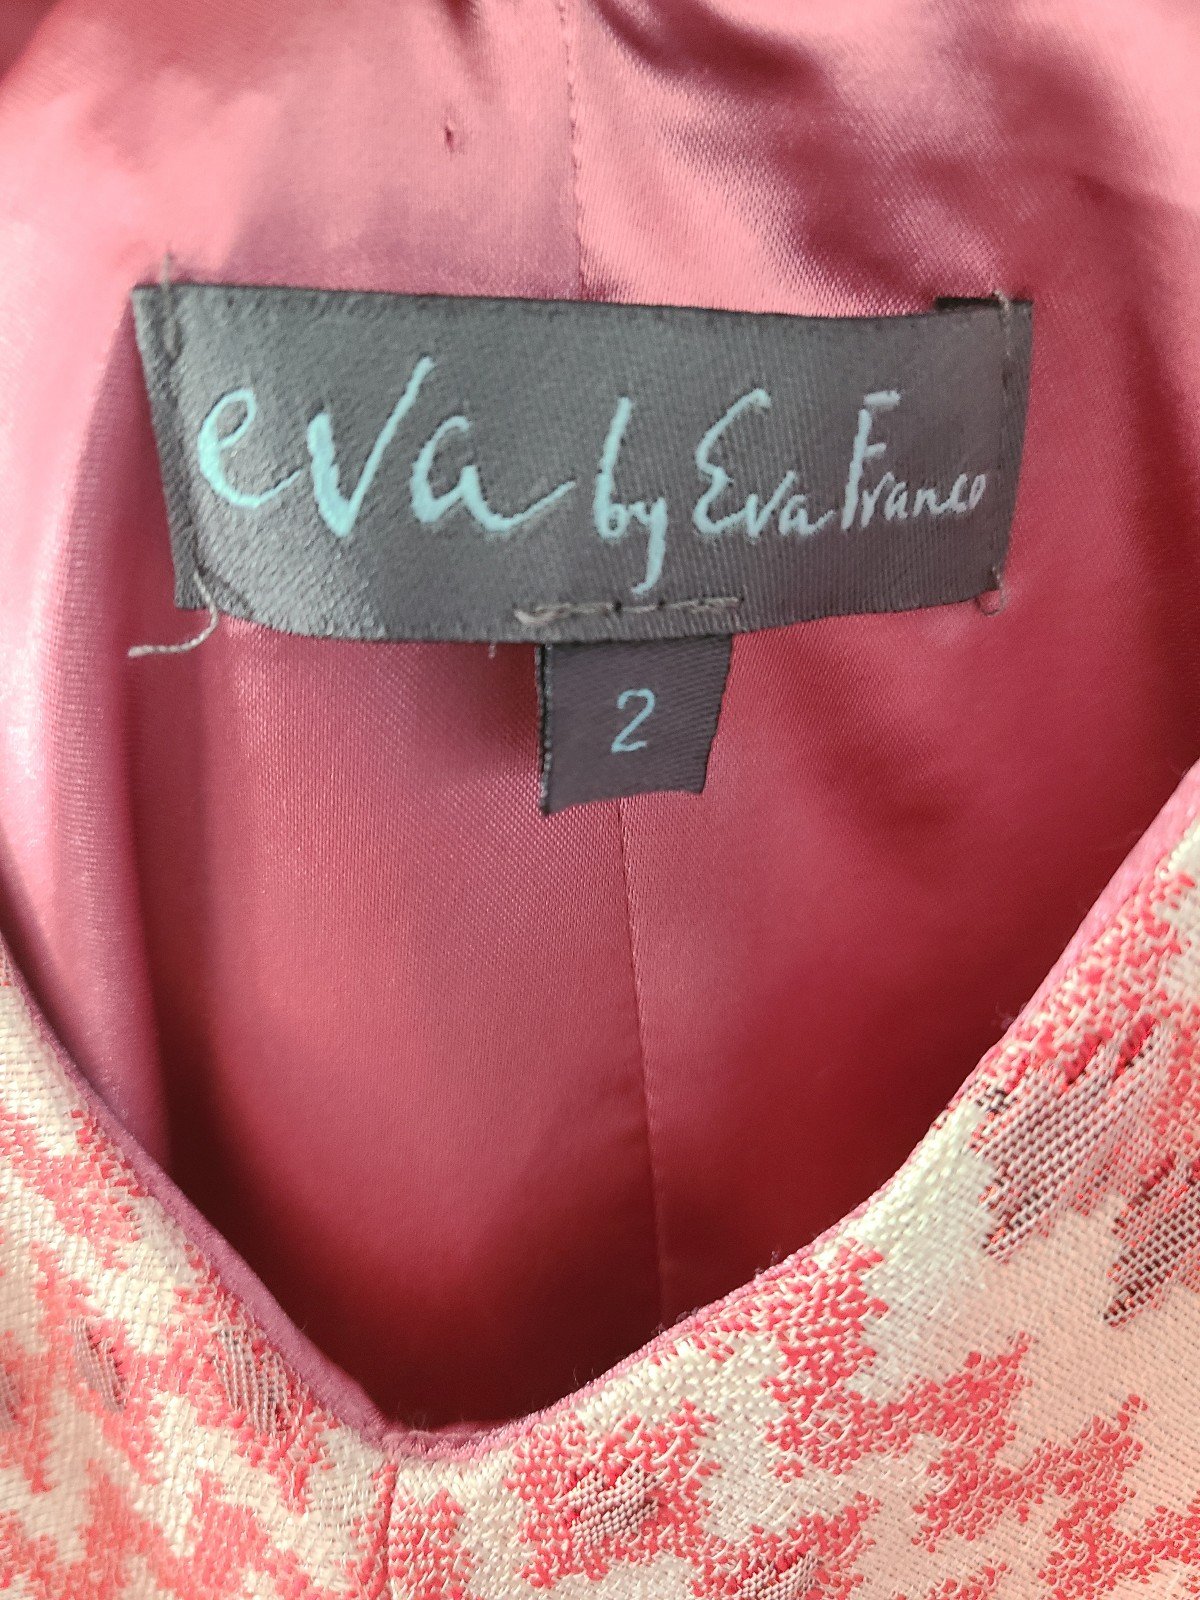 Eva by Eva Franco Pink Beige Embroidered High Low Cocktail Formal Dress Size 2 dGtnivO1c